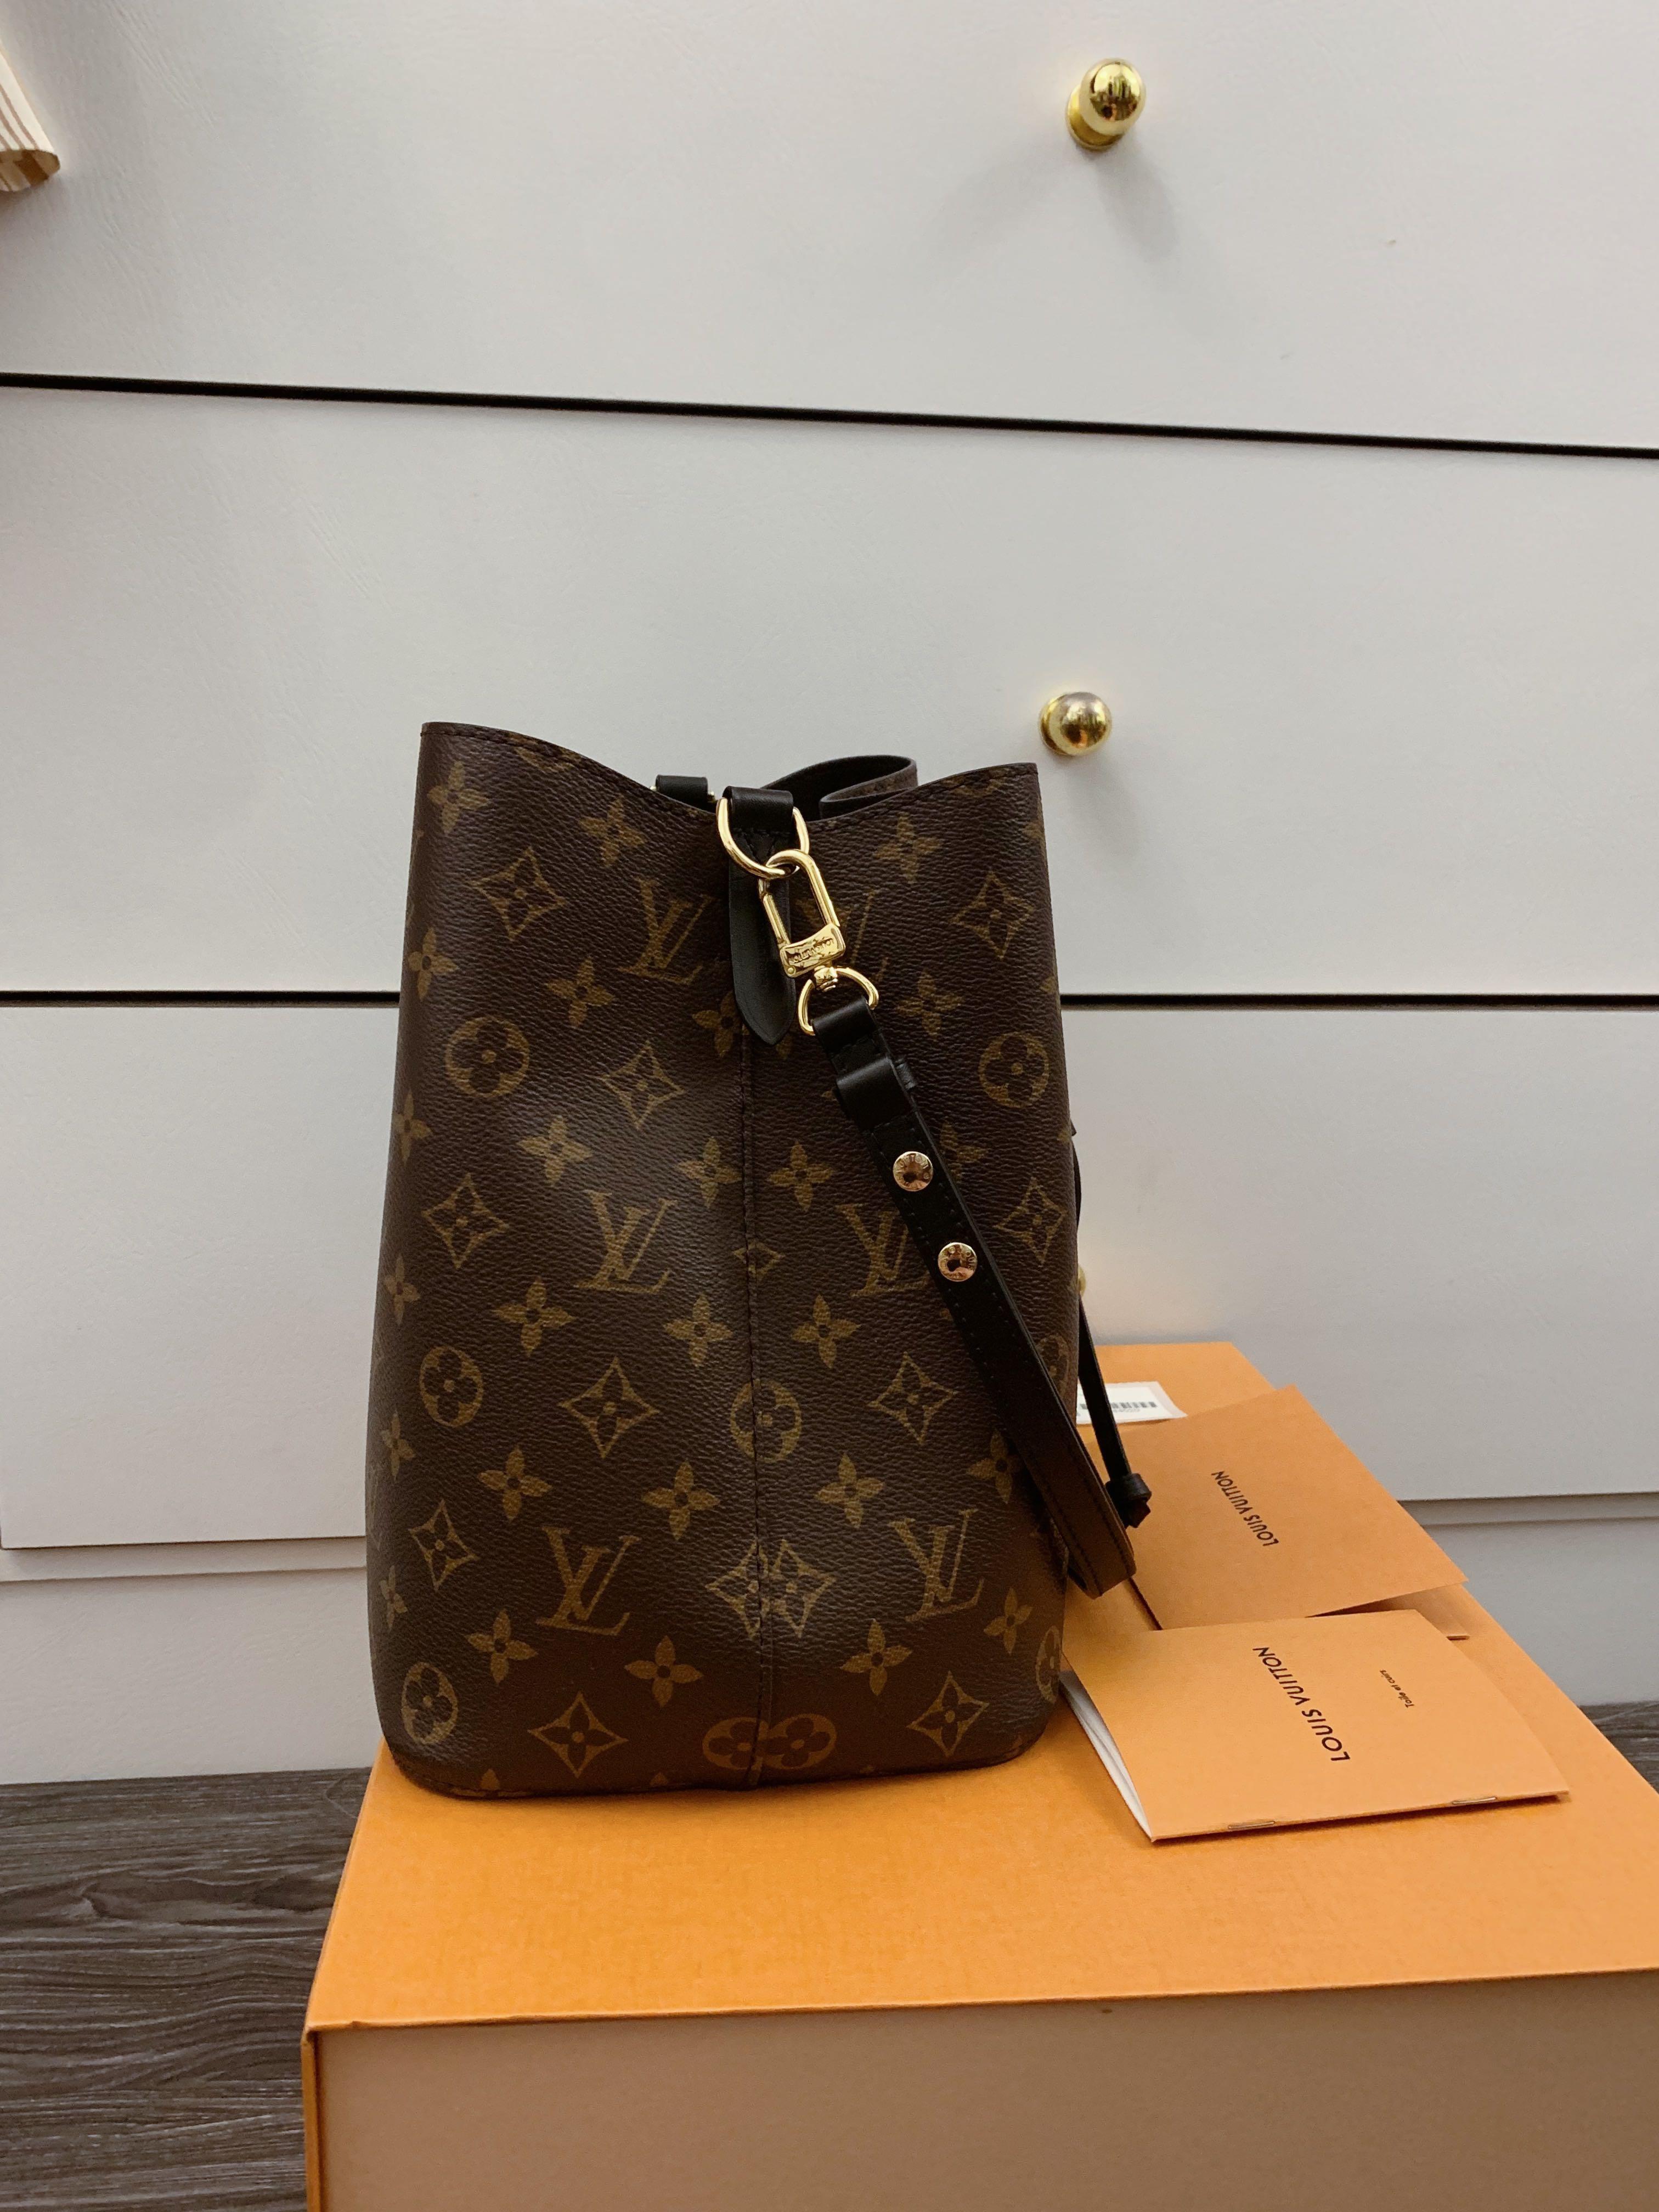 LV NeoNoe Bag Shaper & Felt Organizer, Luxury, Bags & Wallets on Carousell